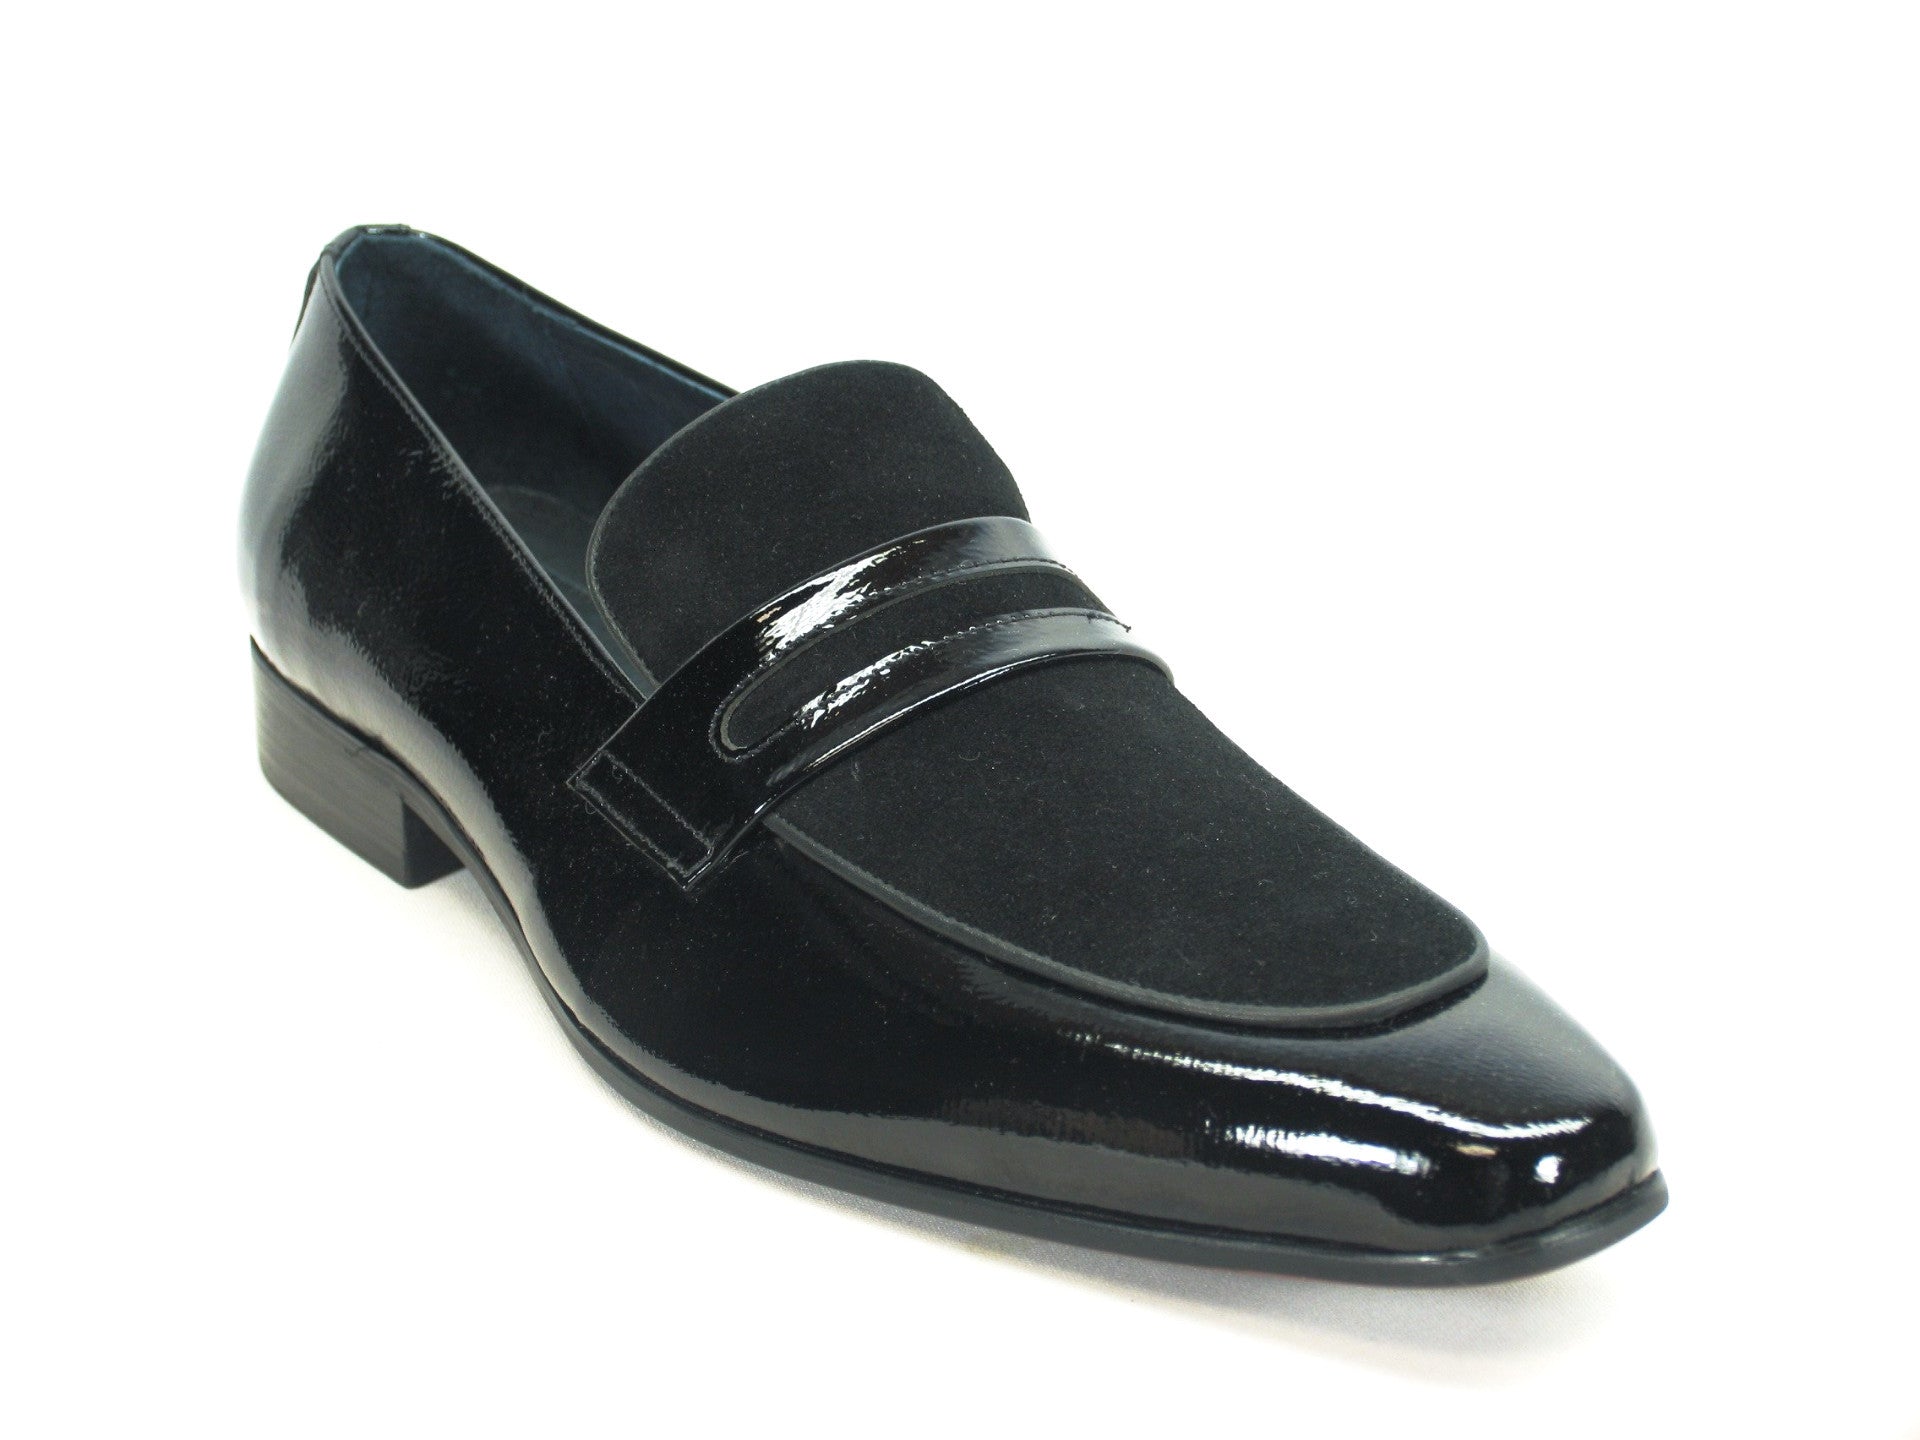 KS1377-12SC Patent Leather Loafer